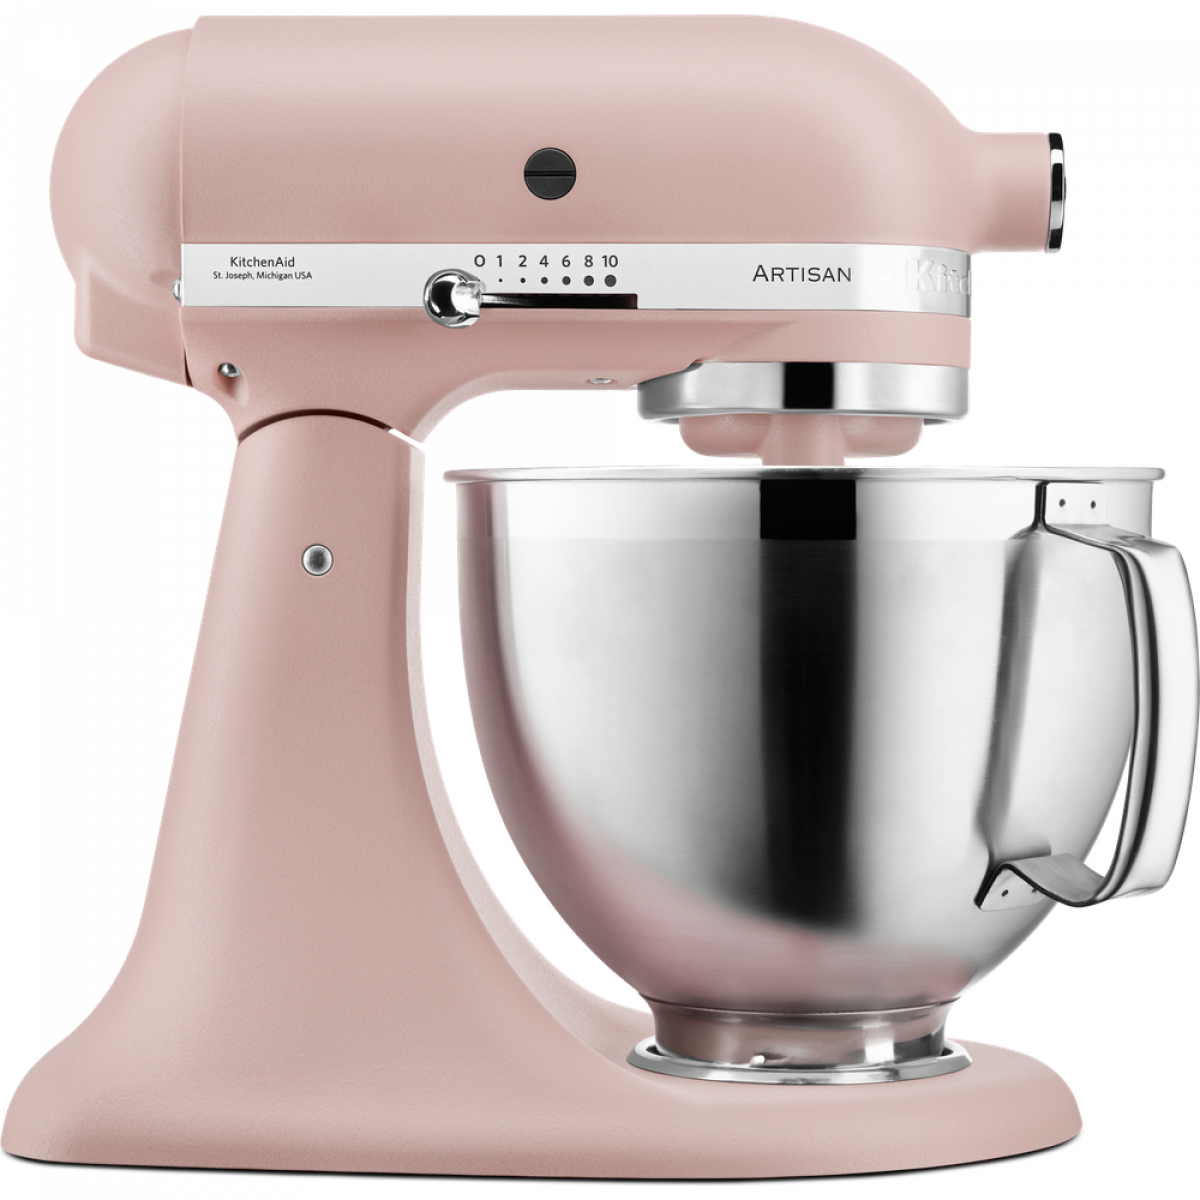 Kitchenaid - keukenmixer Artisan - Feather Pink - RVS aktie - gratis foodprocessor € 209 - K'OOK!